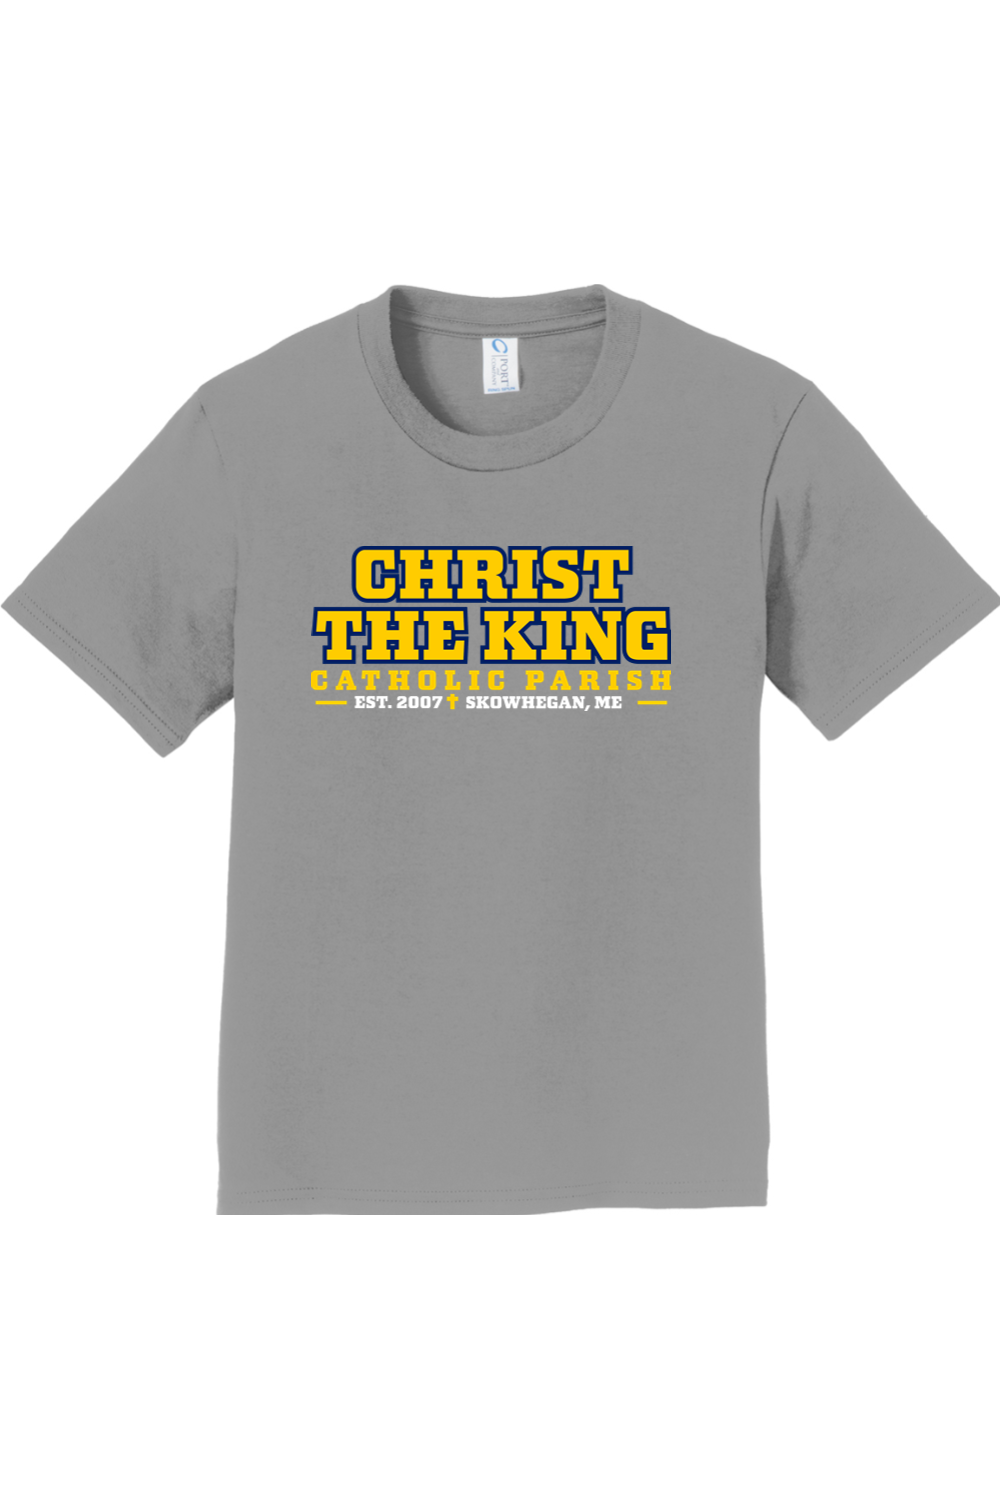 Christ the King Parish, 04976 Youth T-shirt